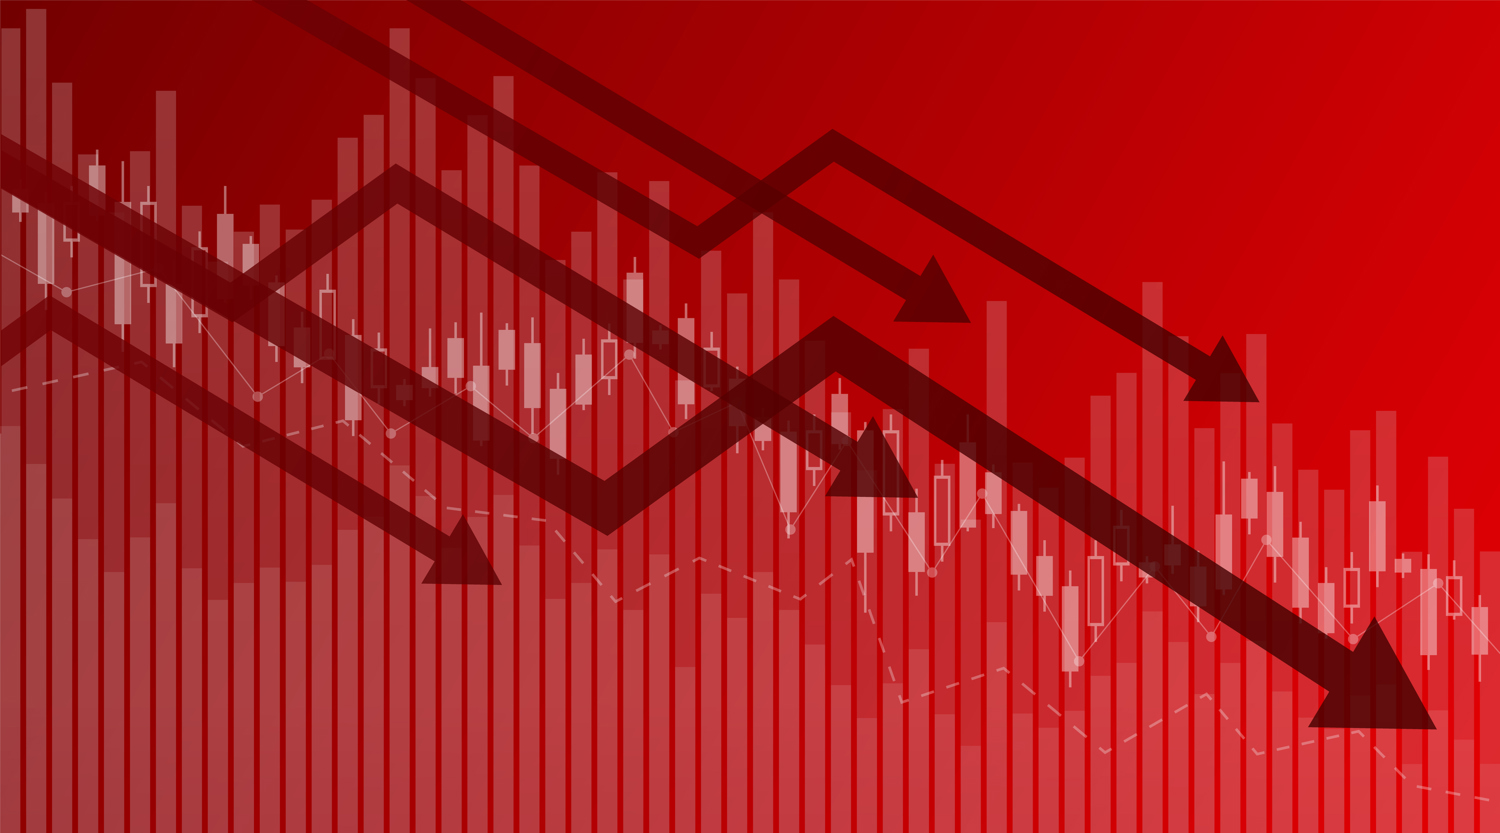 Arrows pointing down, Stock price decreasing, Bearish stock price movement